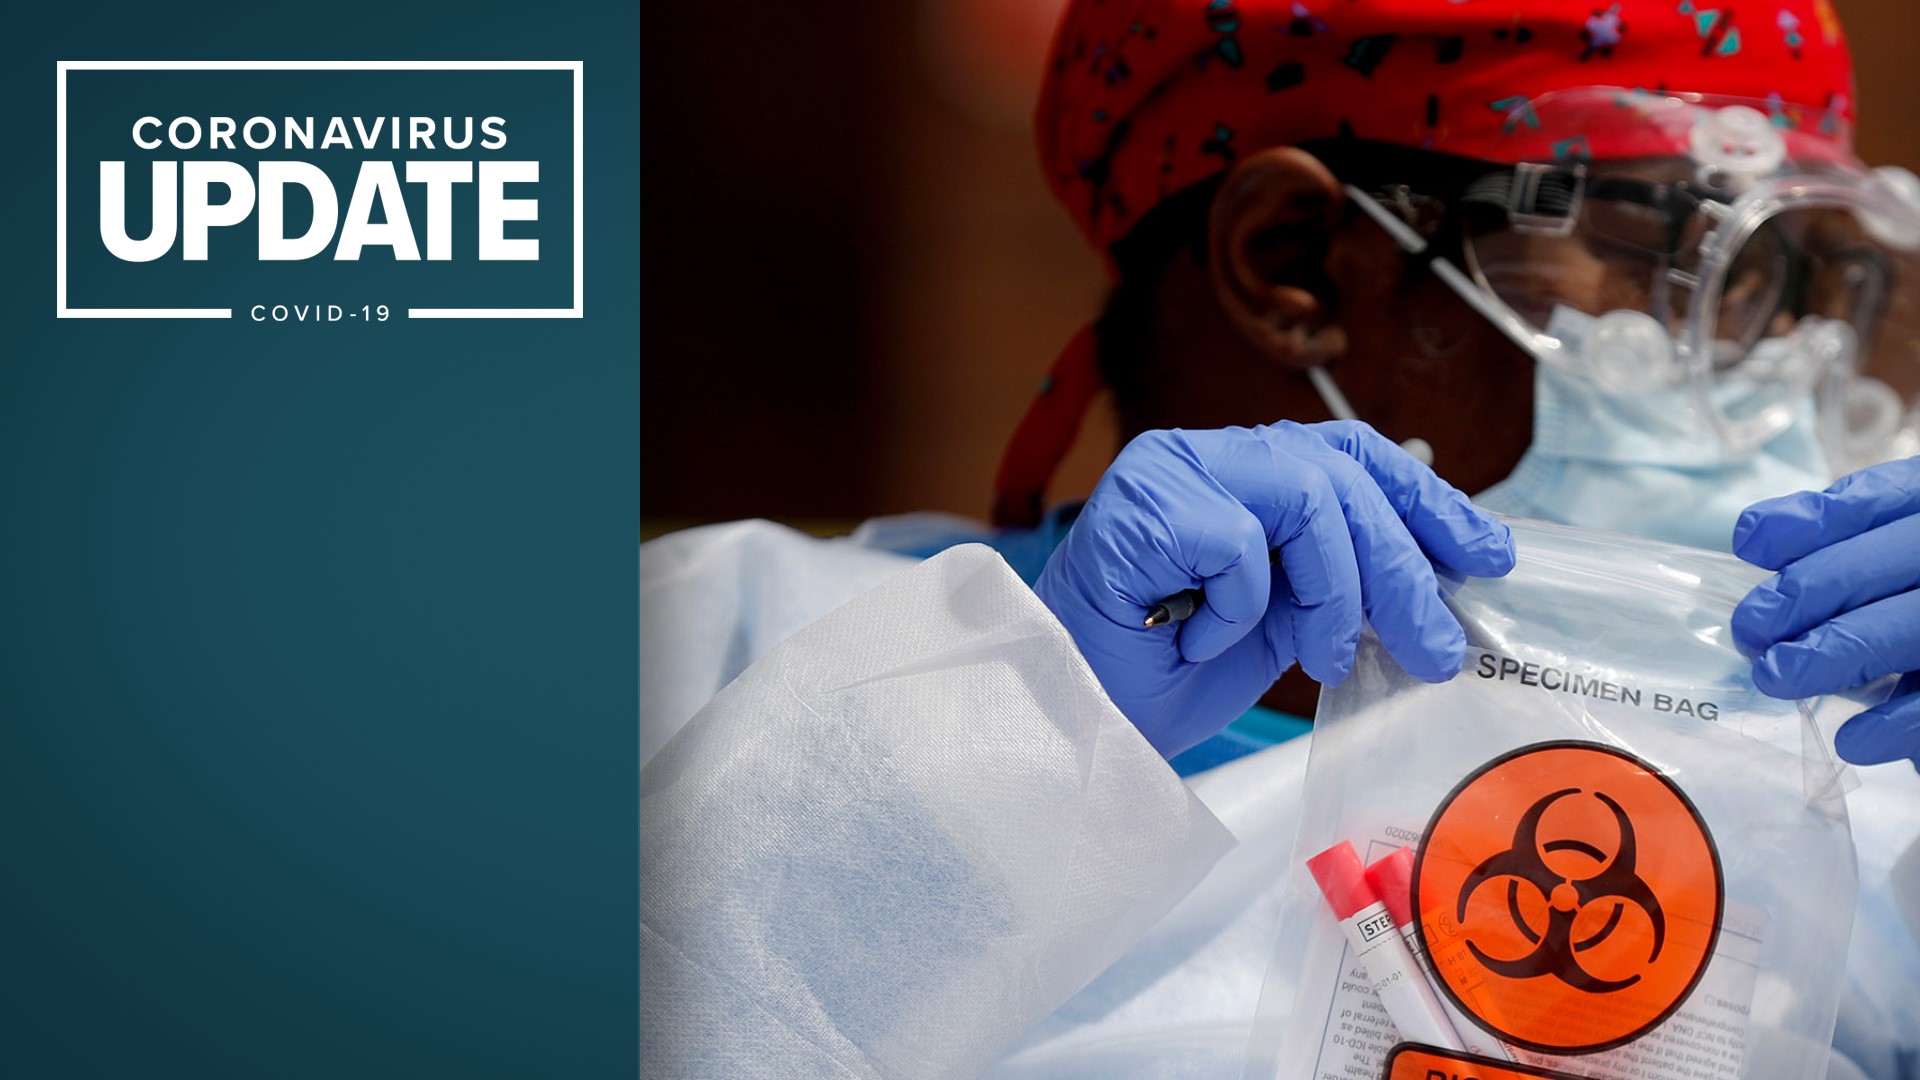 96% of coronavirus cases are the new variant